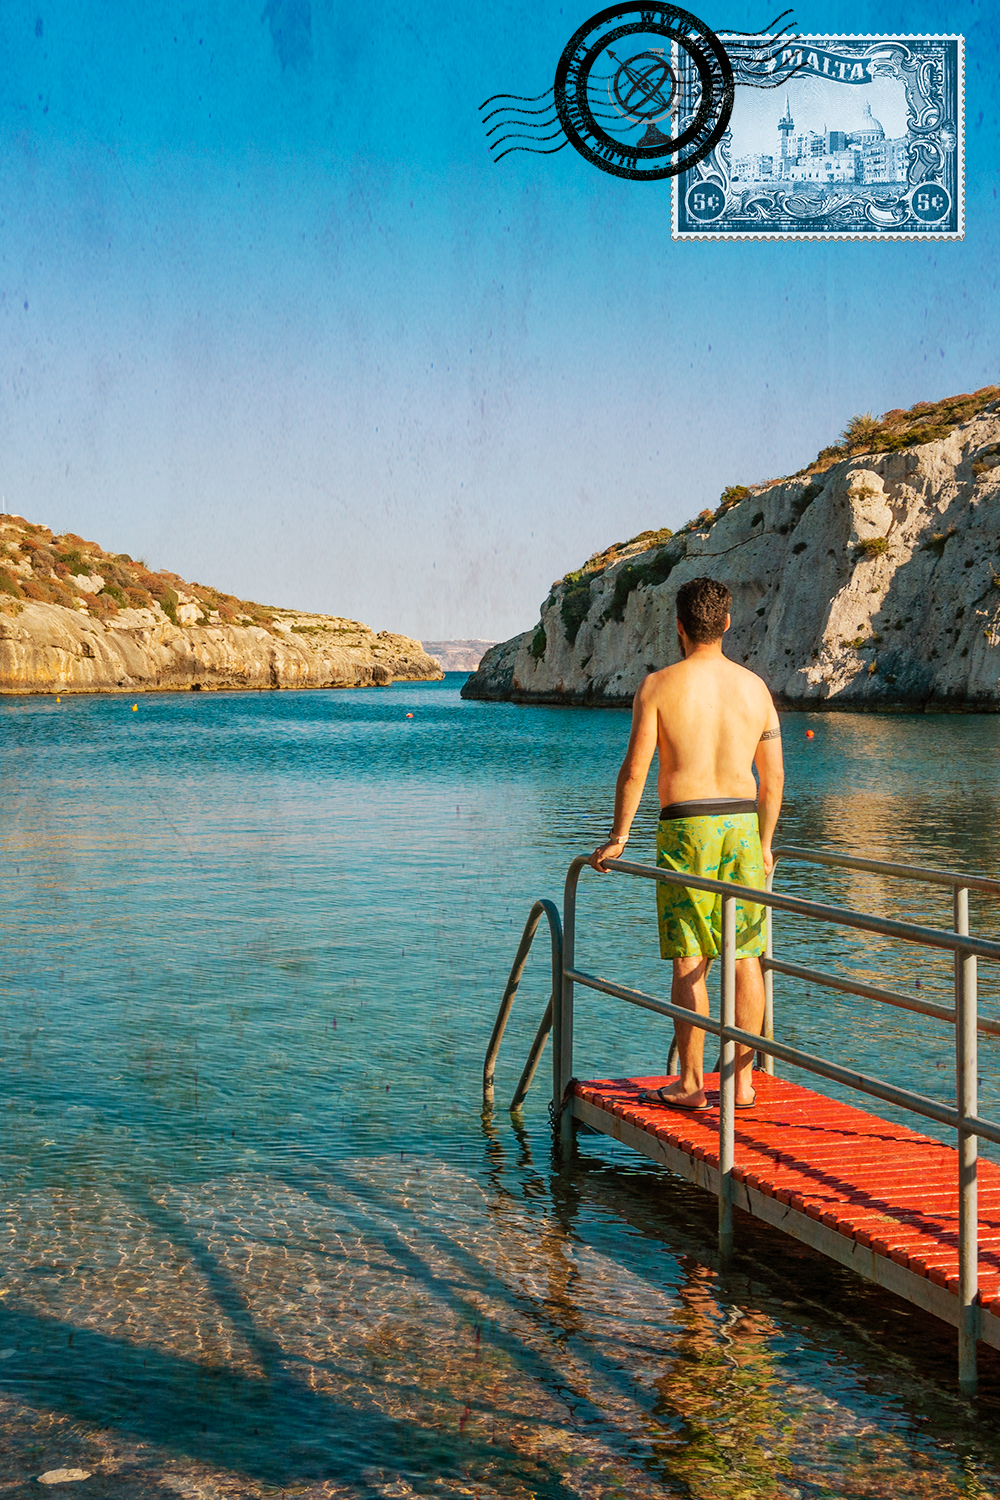 Entering the water in Mġarr ix-Xini Bay